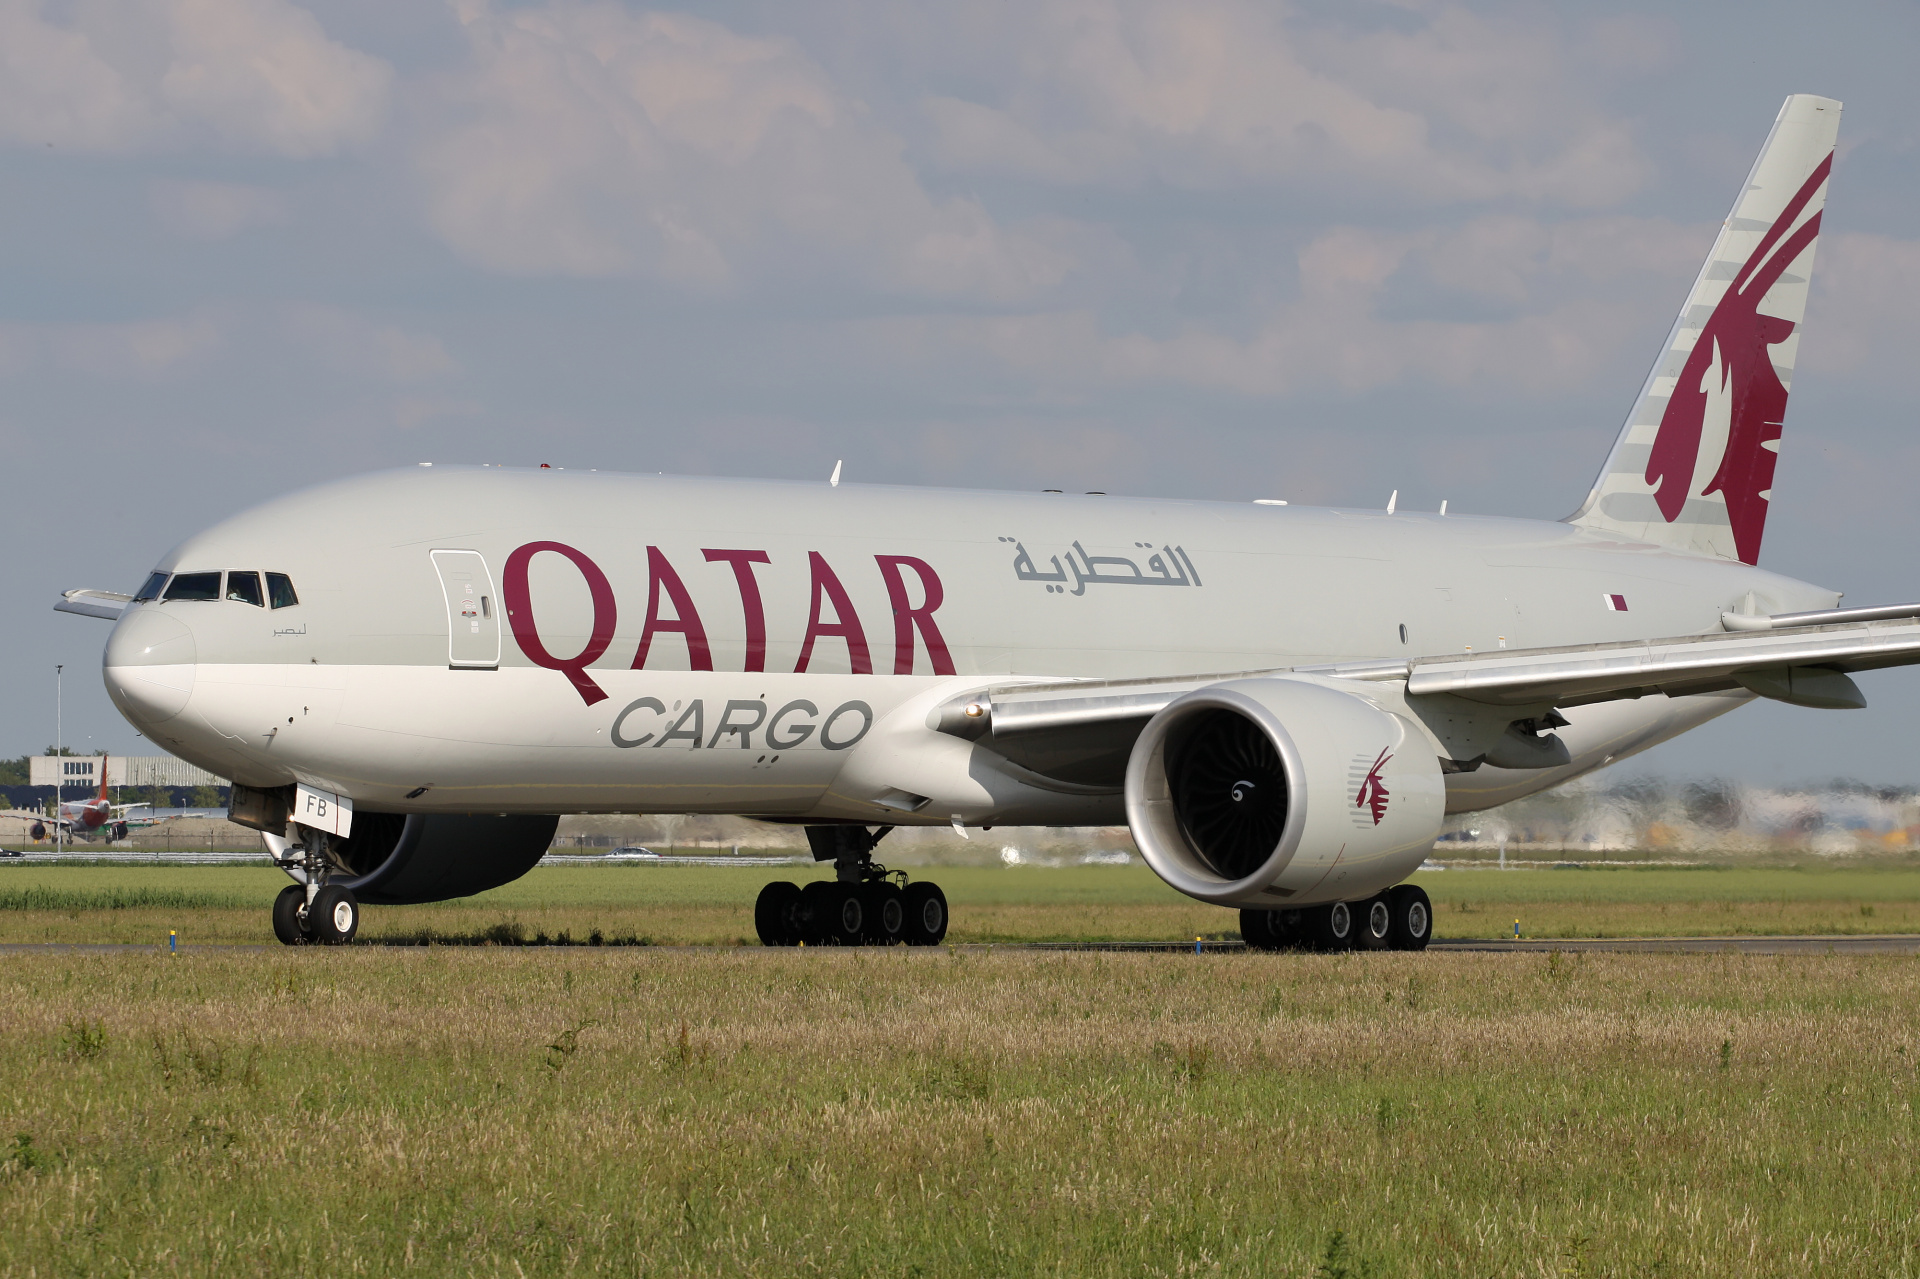 A7-BFB (Aircraft » Schiphol Spotting » Boeing 777F » Qatar Airways Cargo)